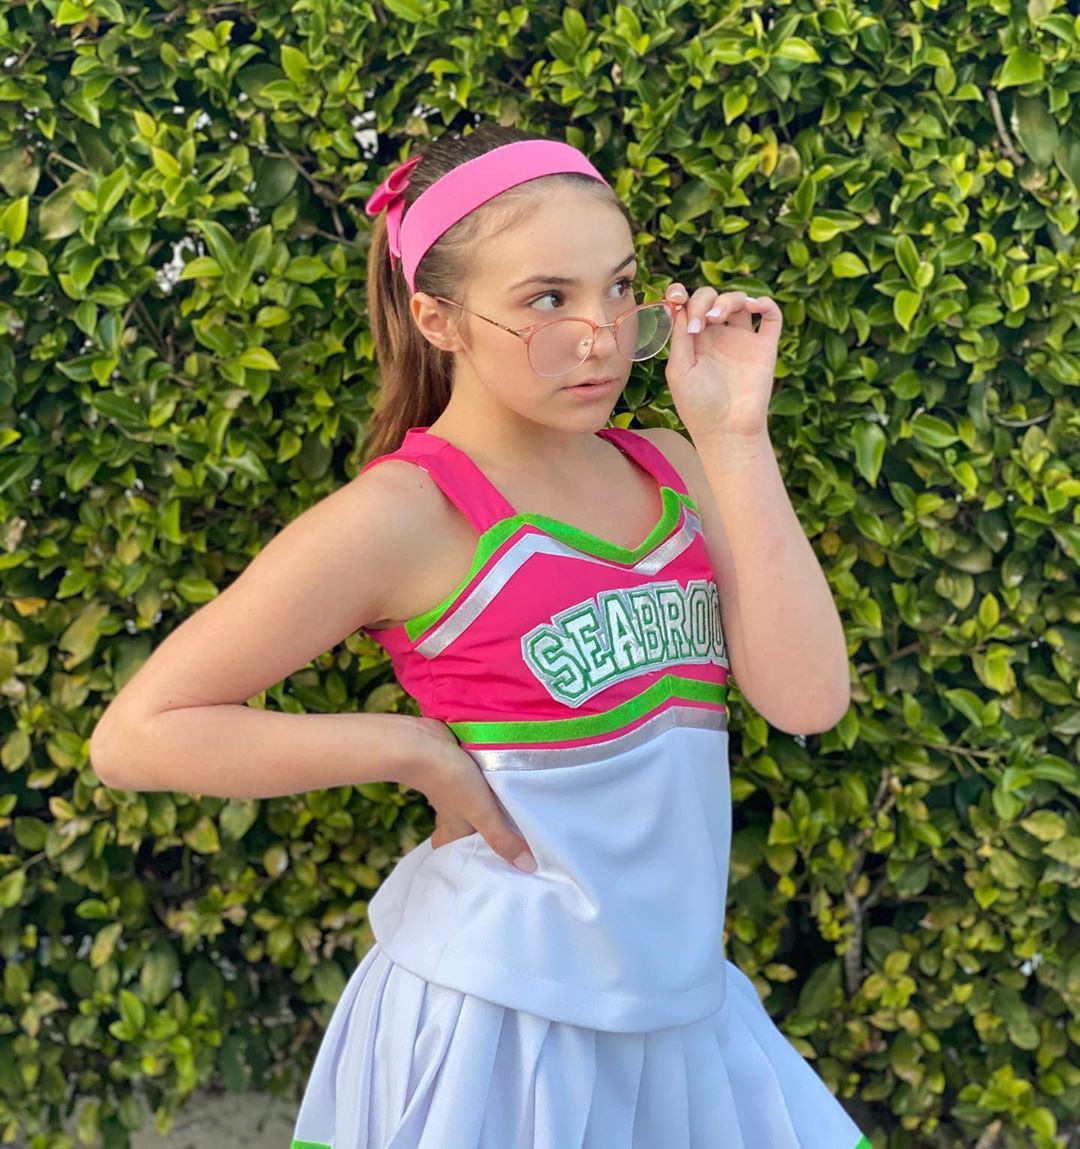 moda rosa de instagram con ropa deportiva, uniforme, ideas de vestimenta: Uniforme de porristas,  Modelo infantil,  Ropa deportiva rosa,  Piper Rockelle Instagram  